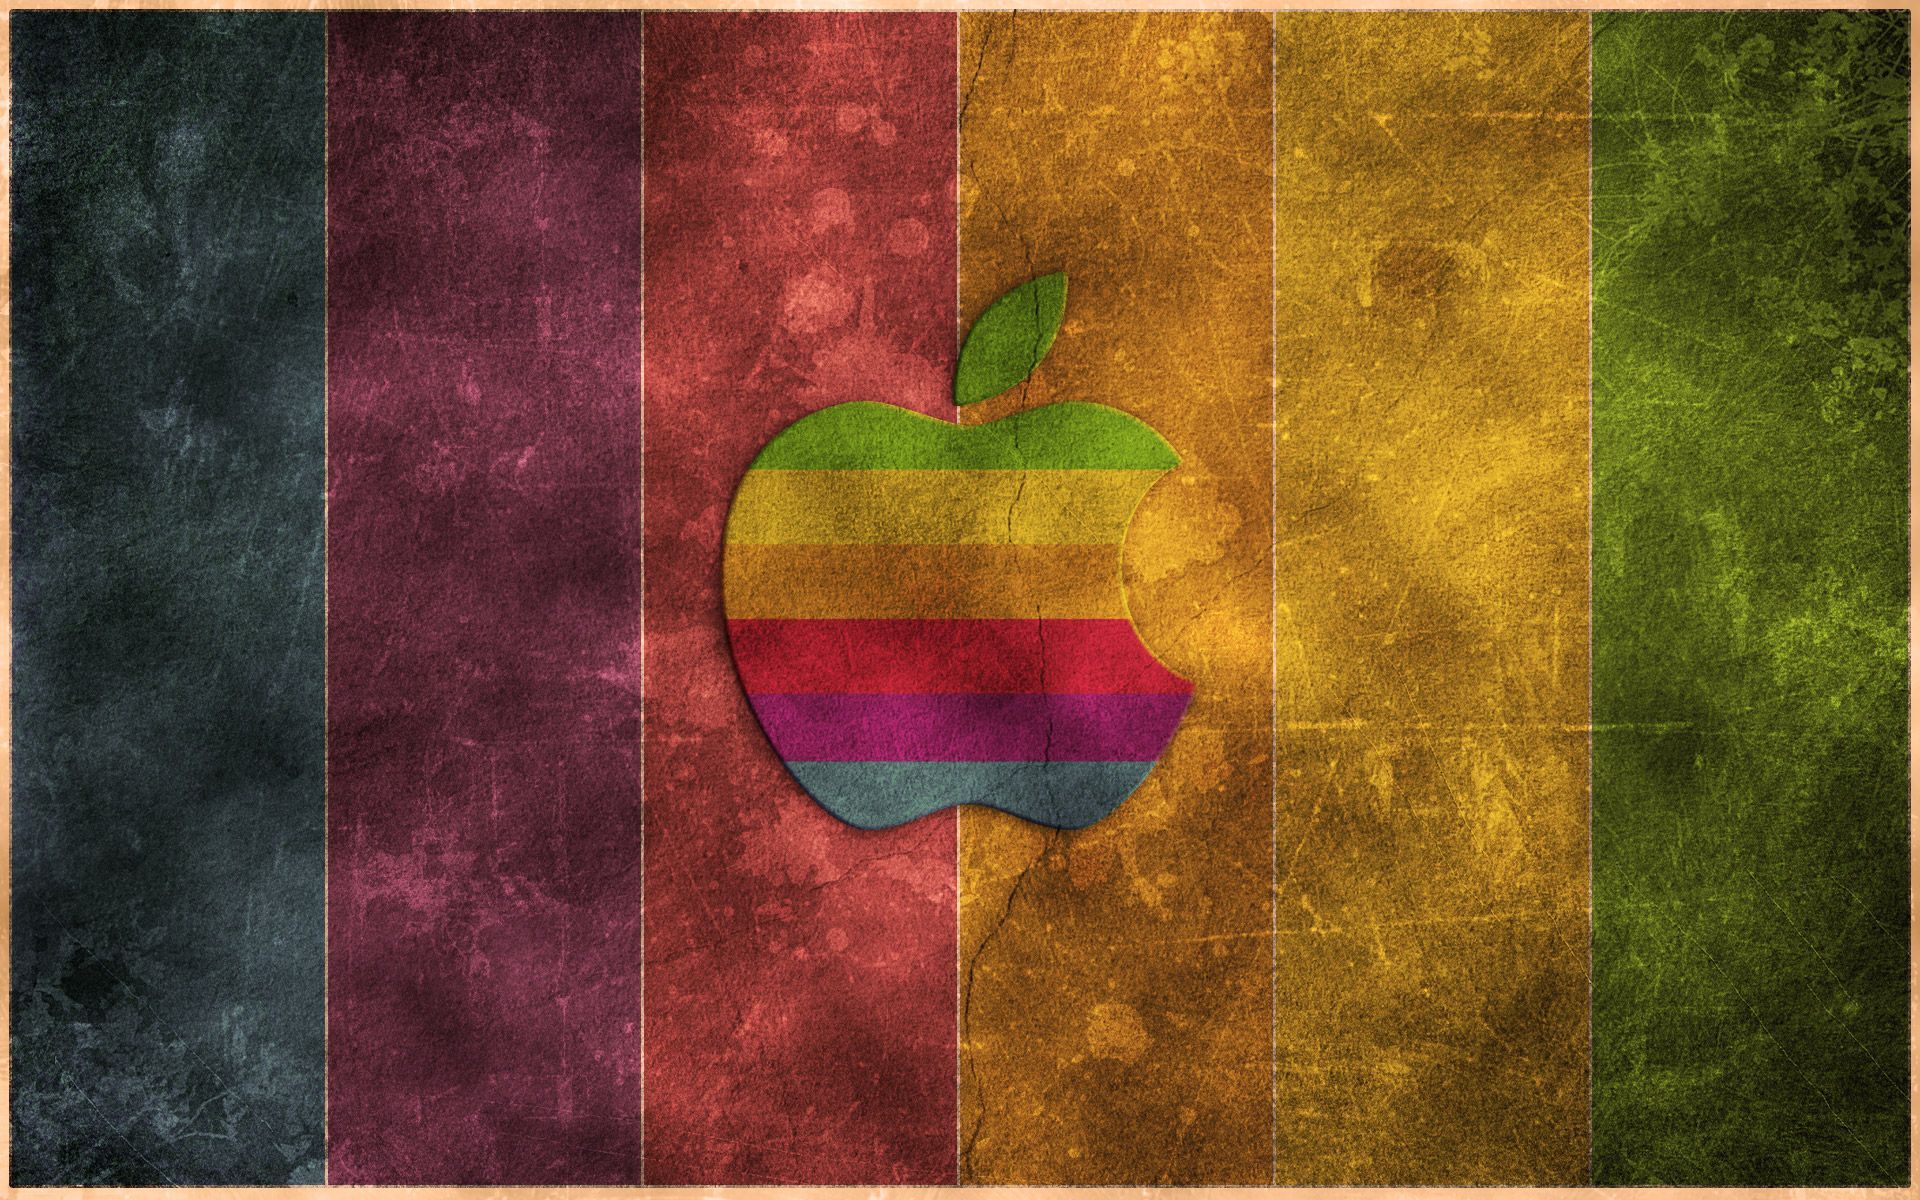 Retro Apple Wallpaper - 43351